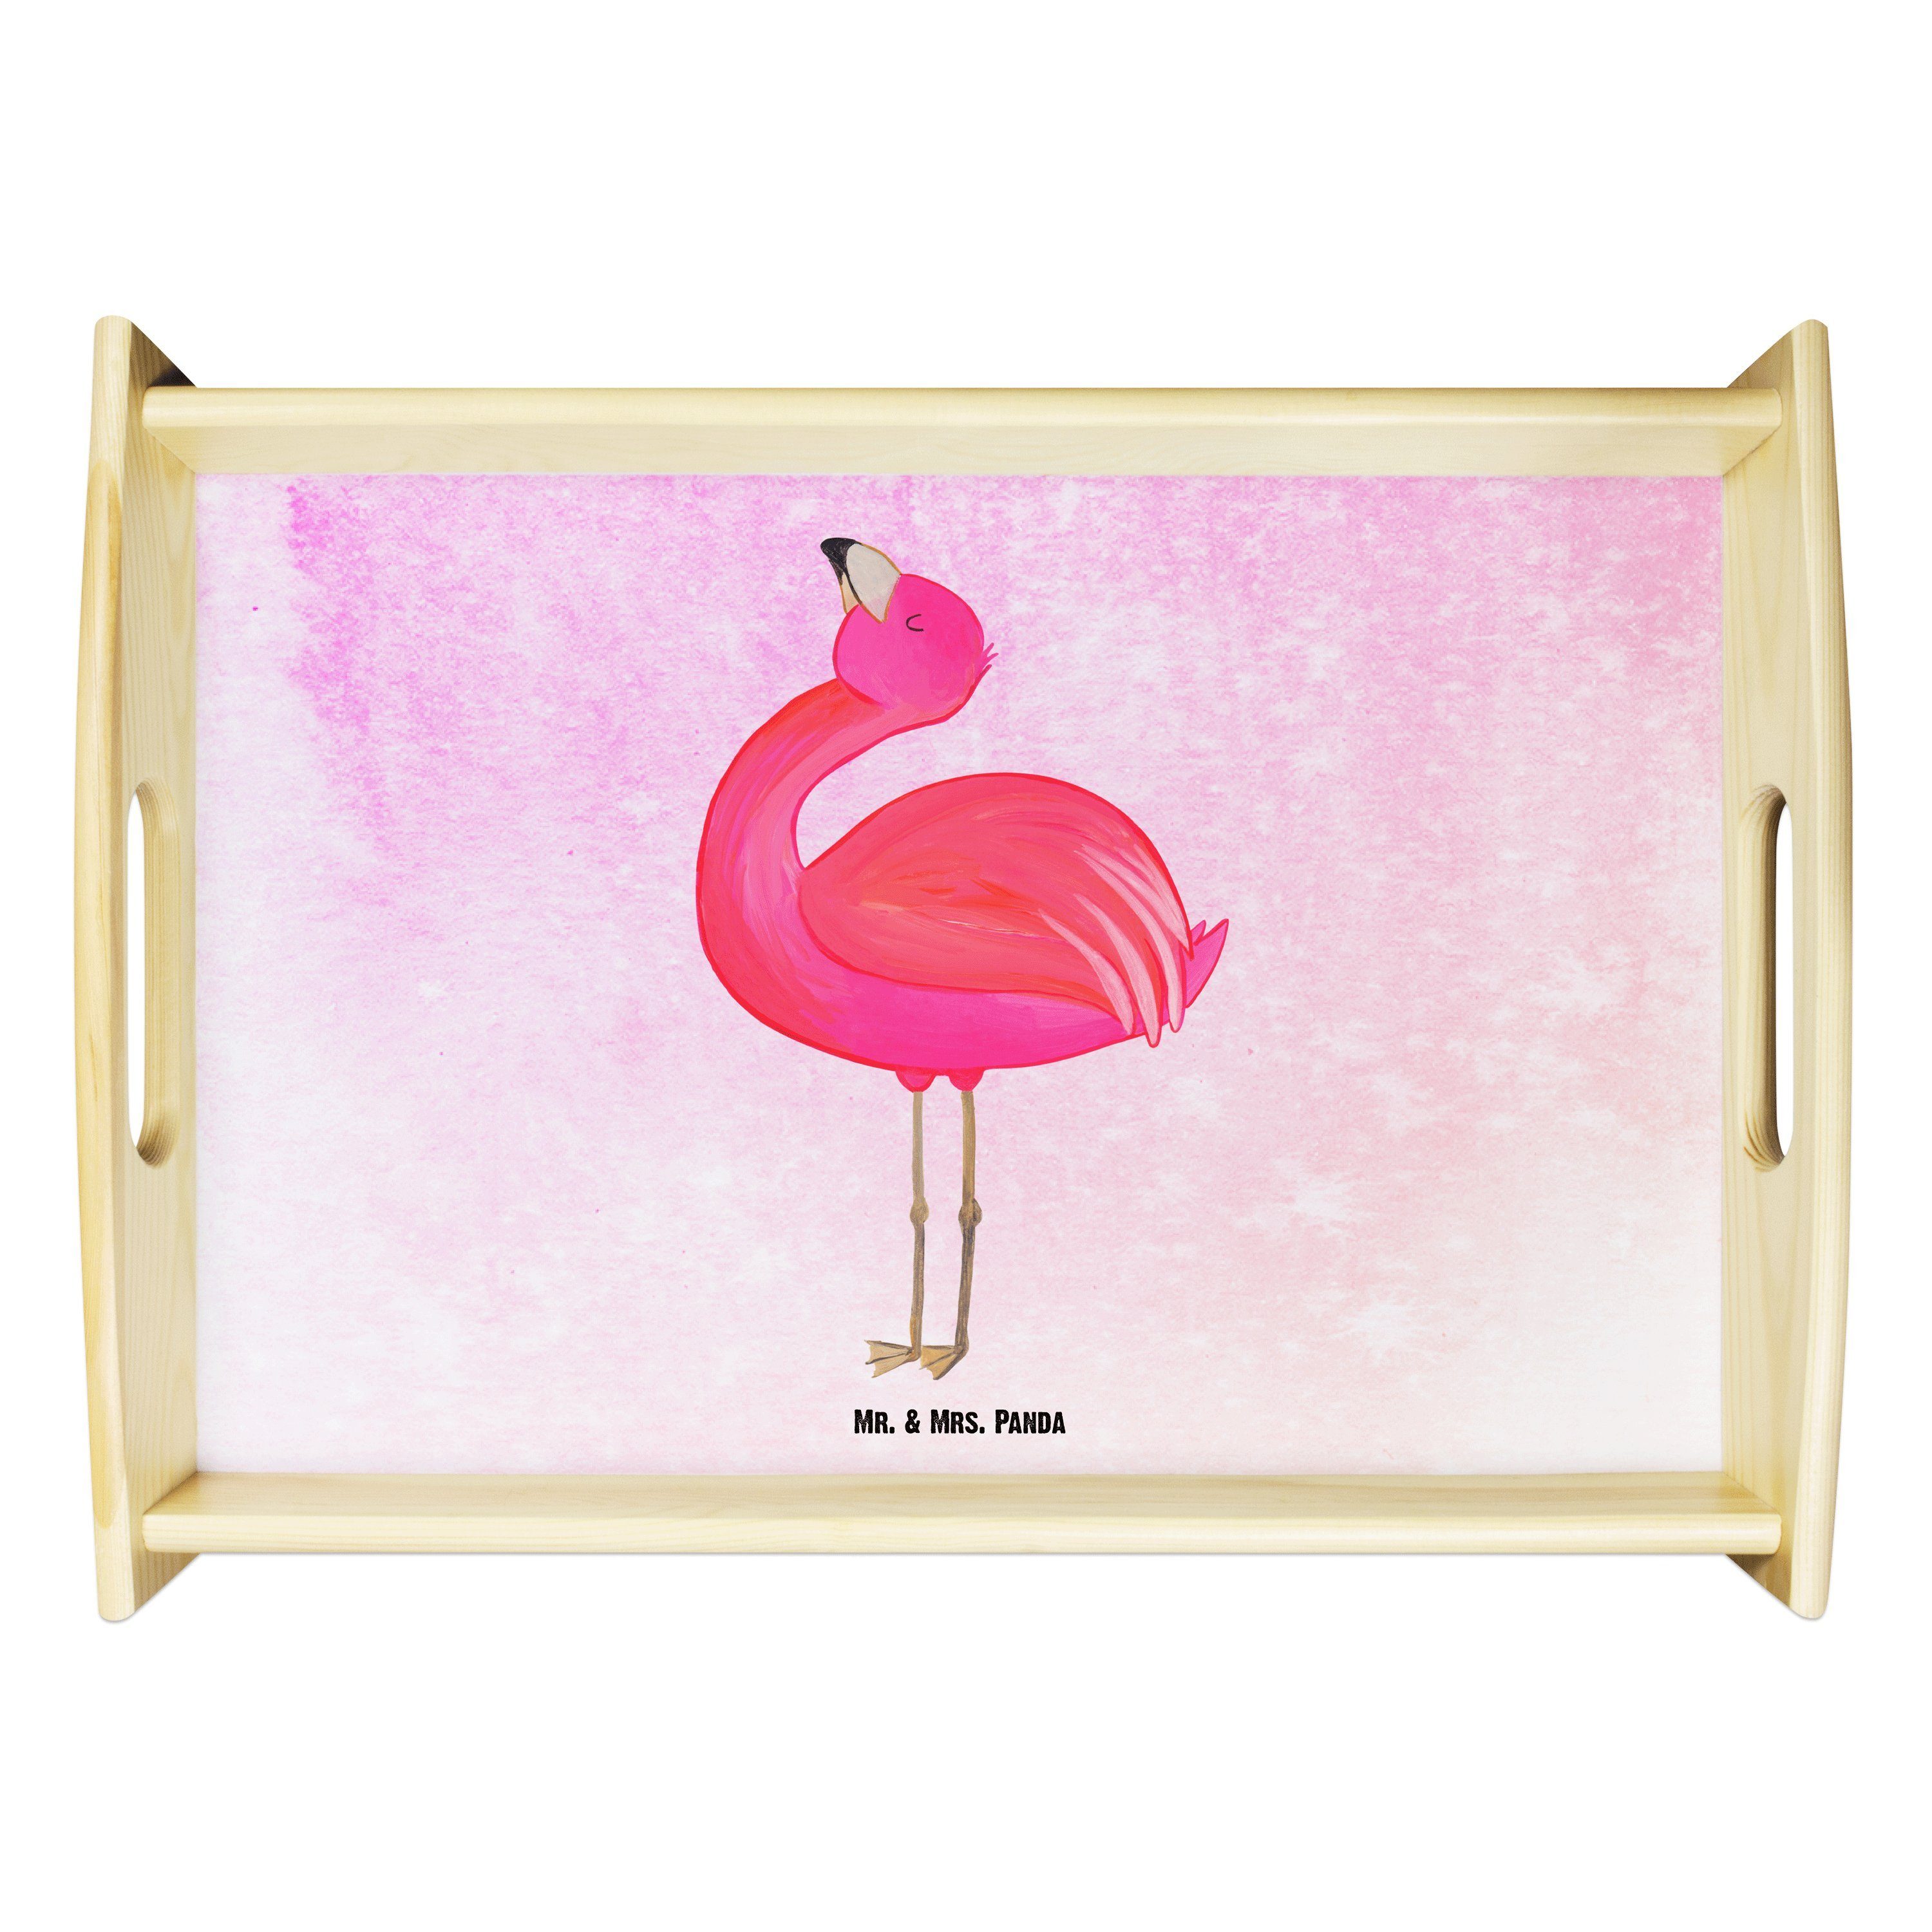 Mr. & Mrs. Panda Tablett Echtholz Geschenk, glücklich, - stolz lasiert, (1-tlg) Pink - Flamingo Küchentablett, Aquarell